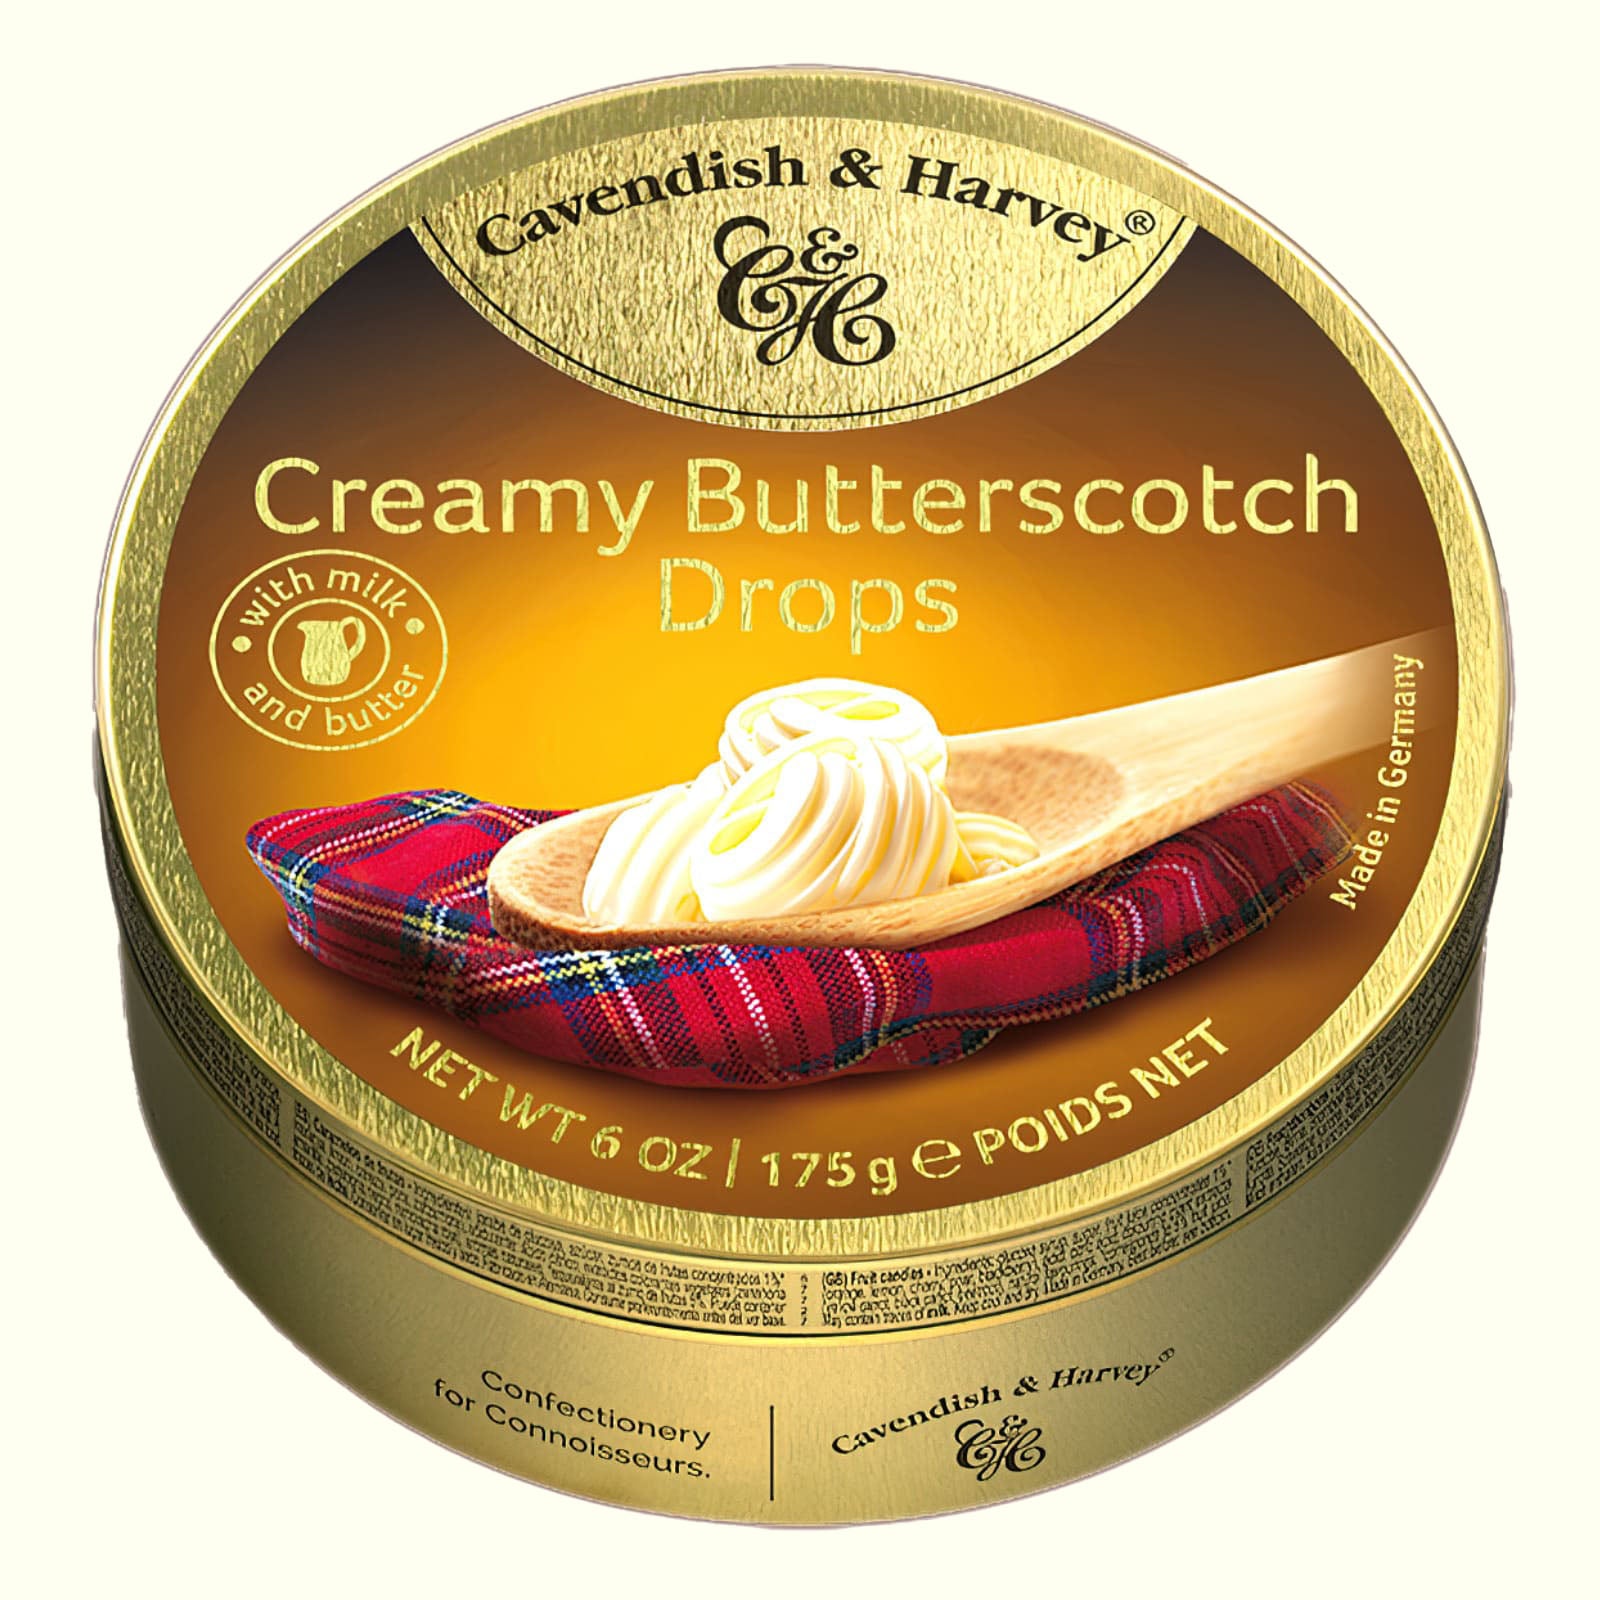 Cavendish & Harvey  Creamy Butterscotch Bonbons 175g